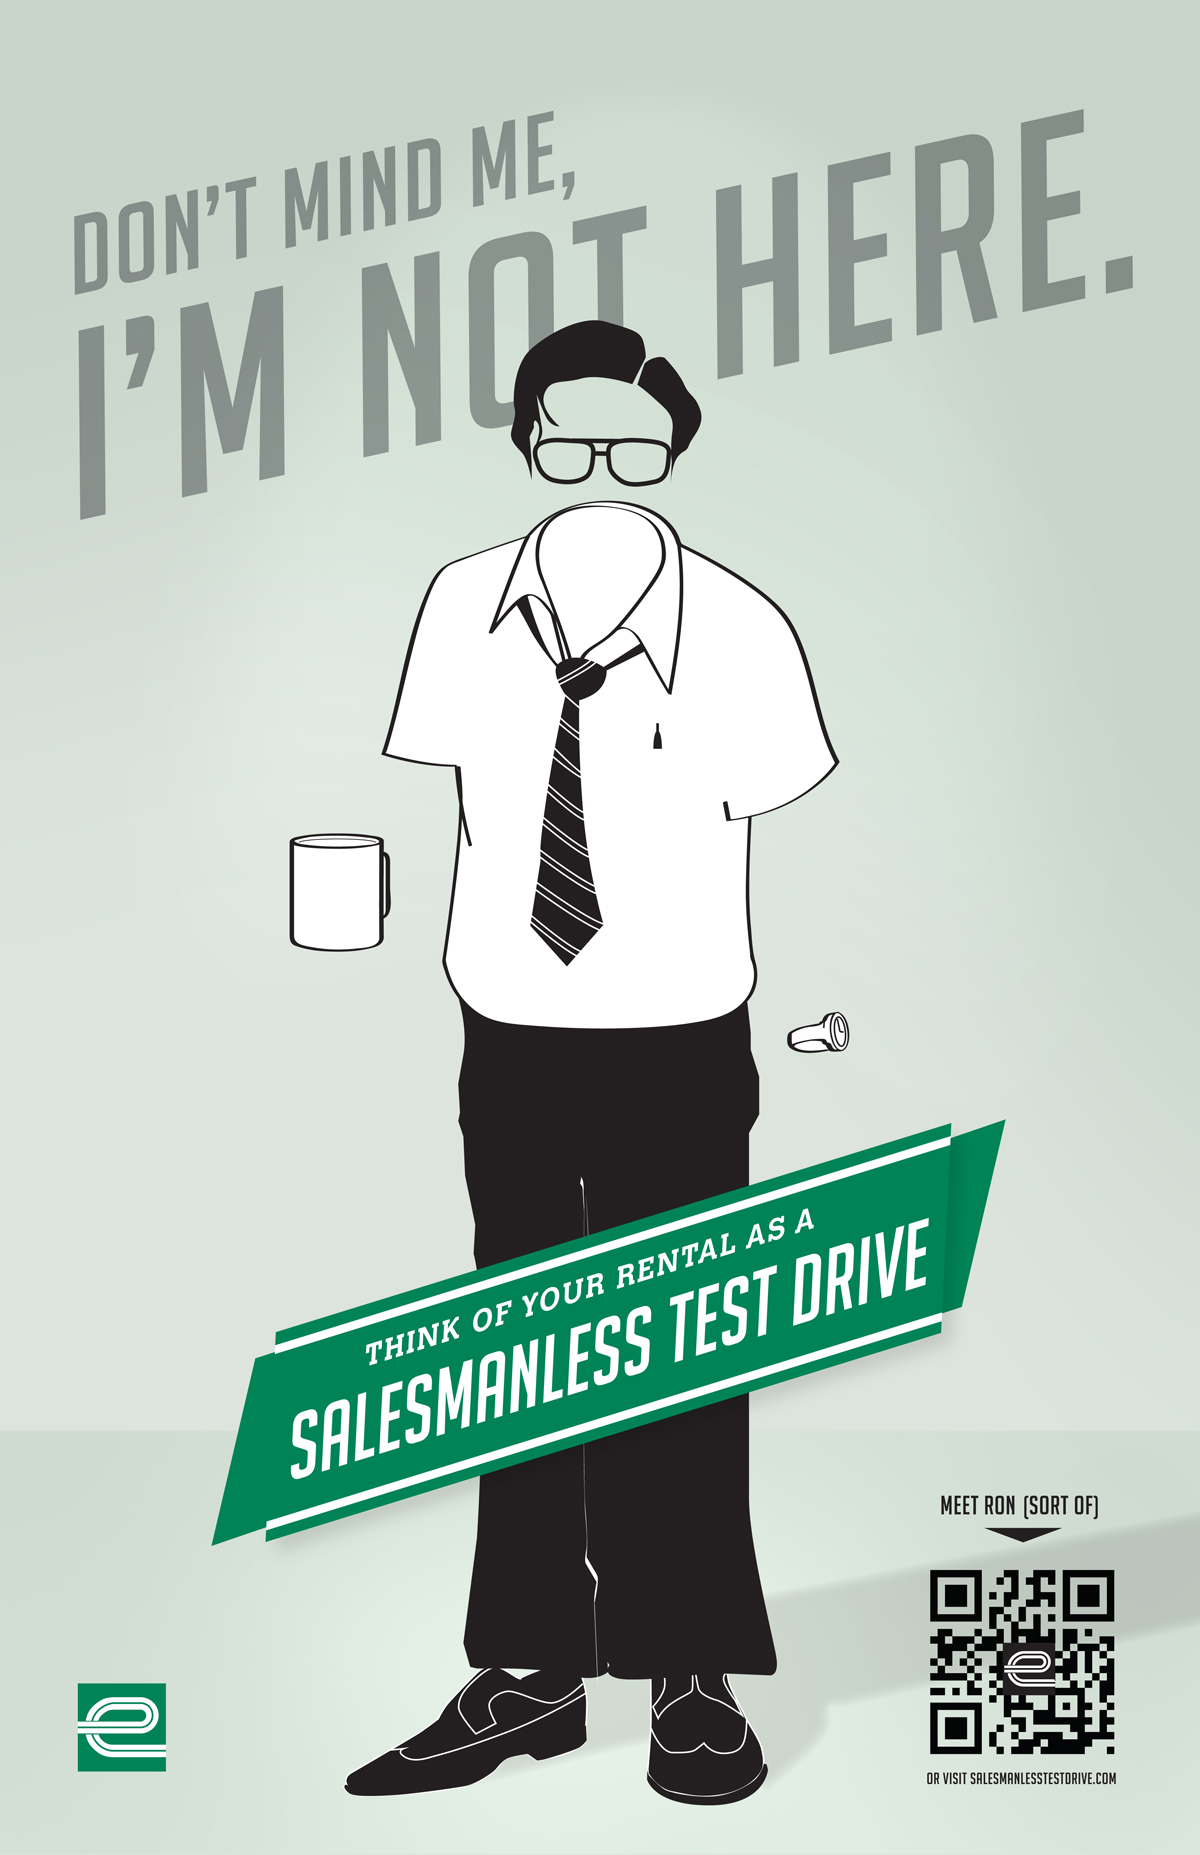 enterprise car Rent rental salesman salesmanless green test drive ad ads qr code dealer